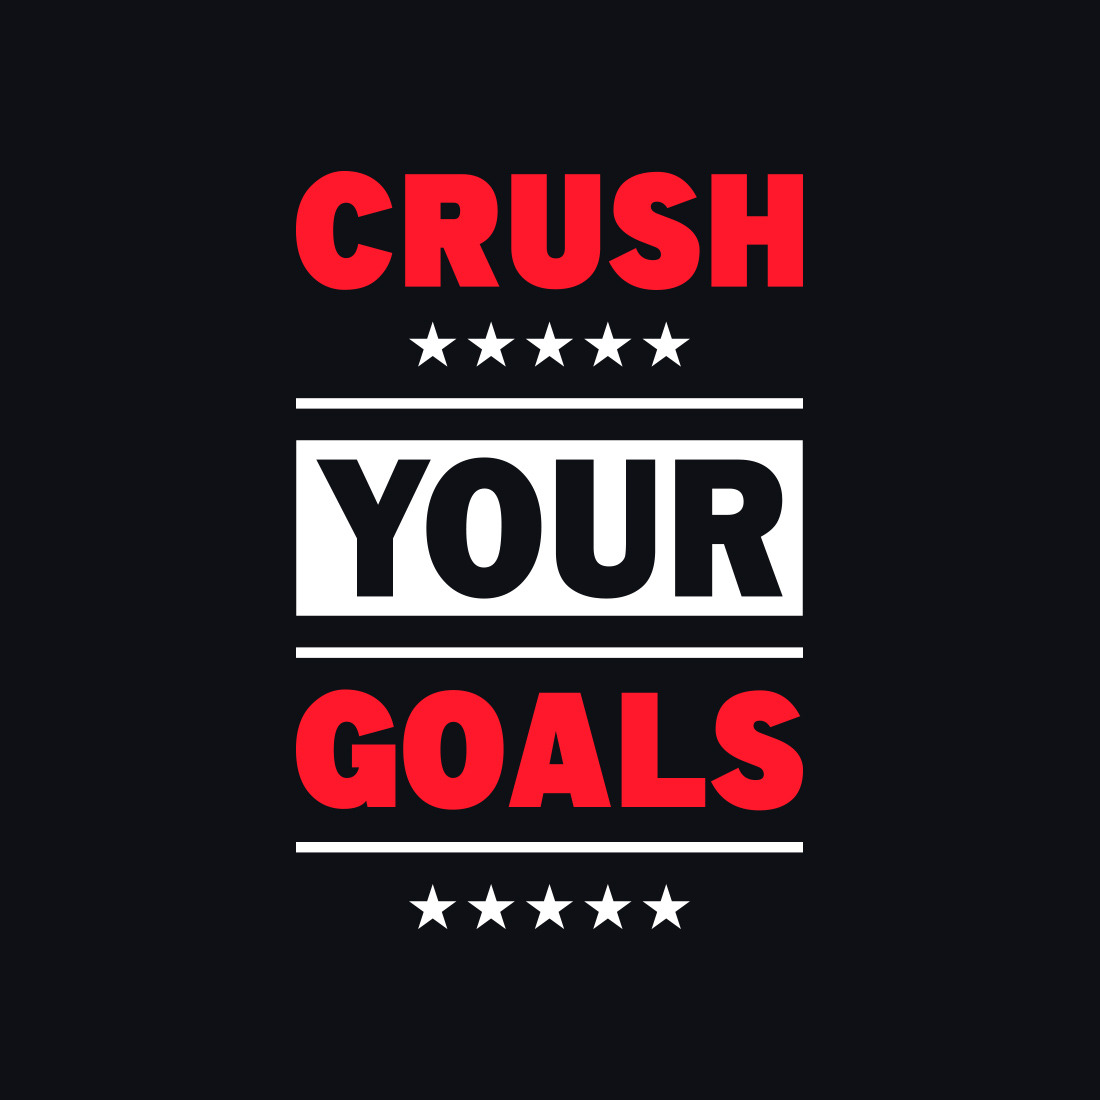 Crush Your Goals Typography T-Shirt Design presentation.